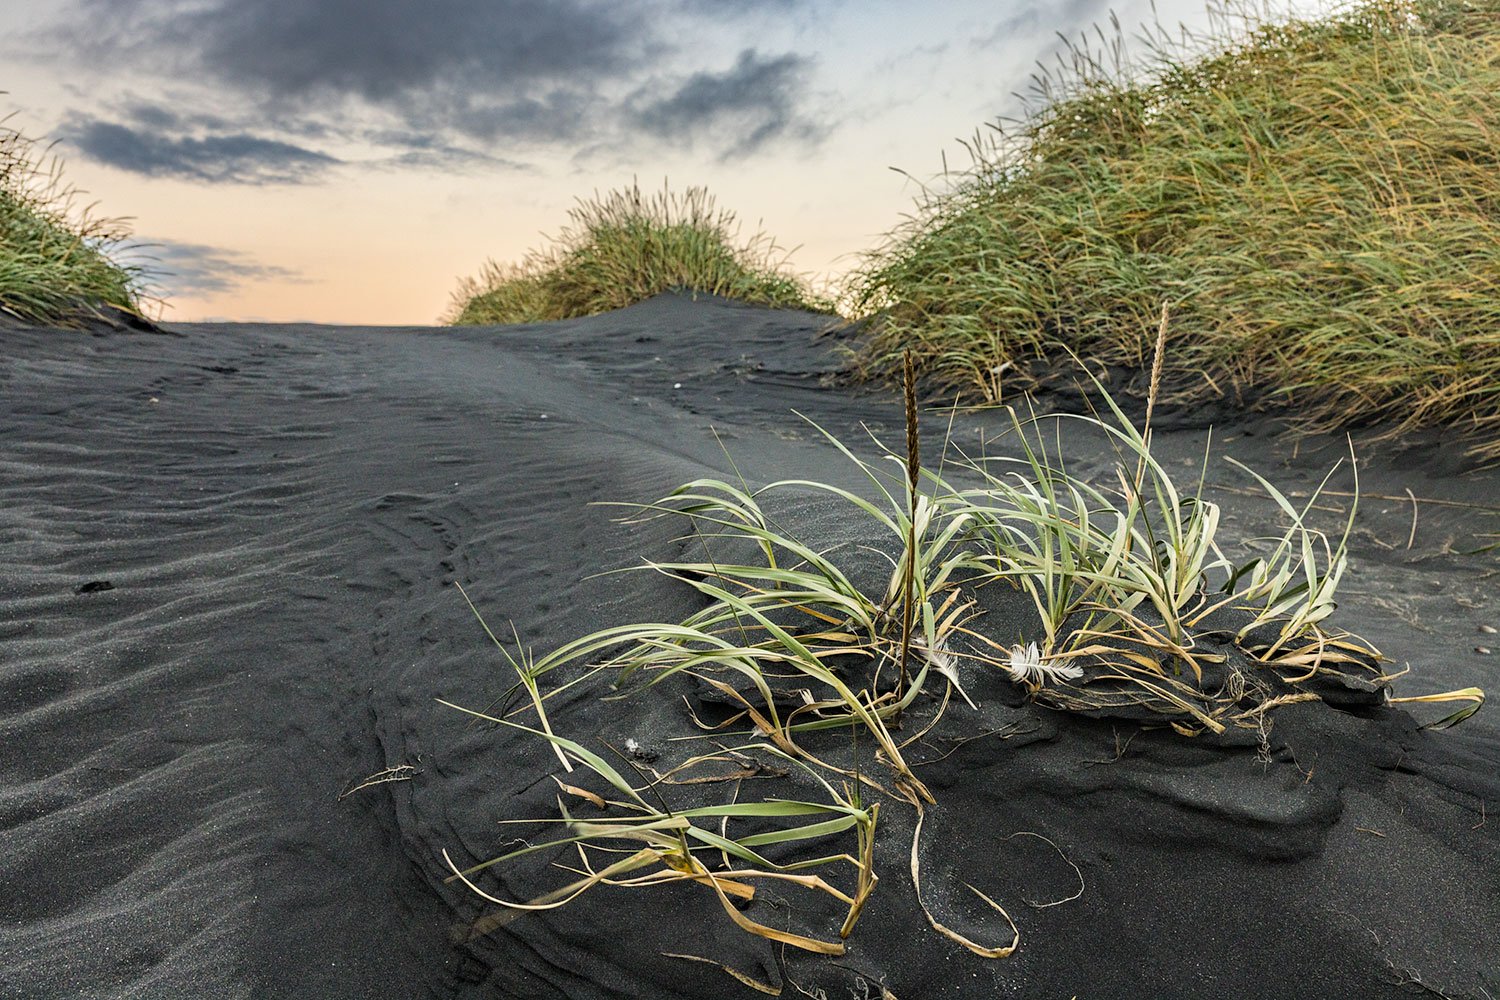 Seagrass at Vestrahorn. Stokknes Peninsula, Iceland. 2022